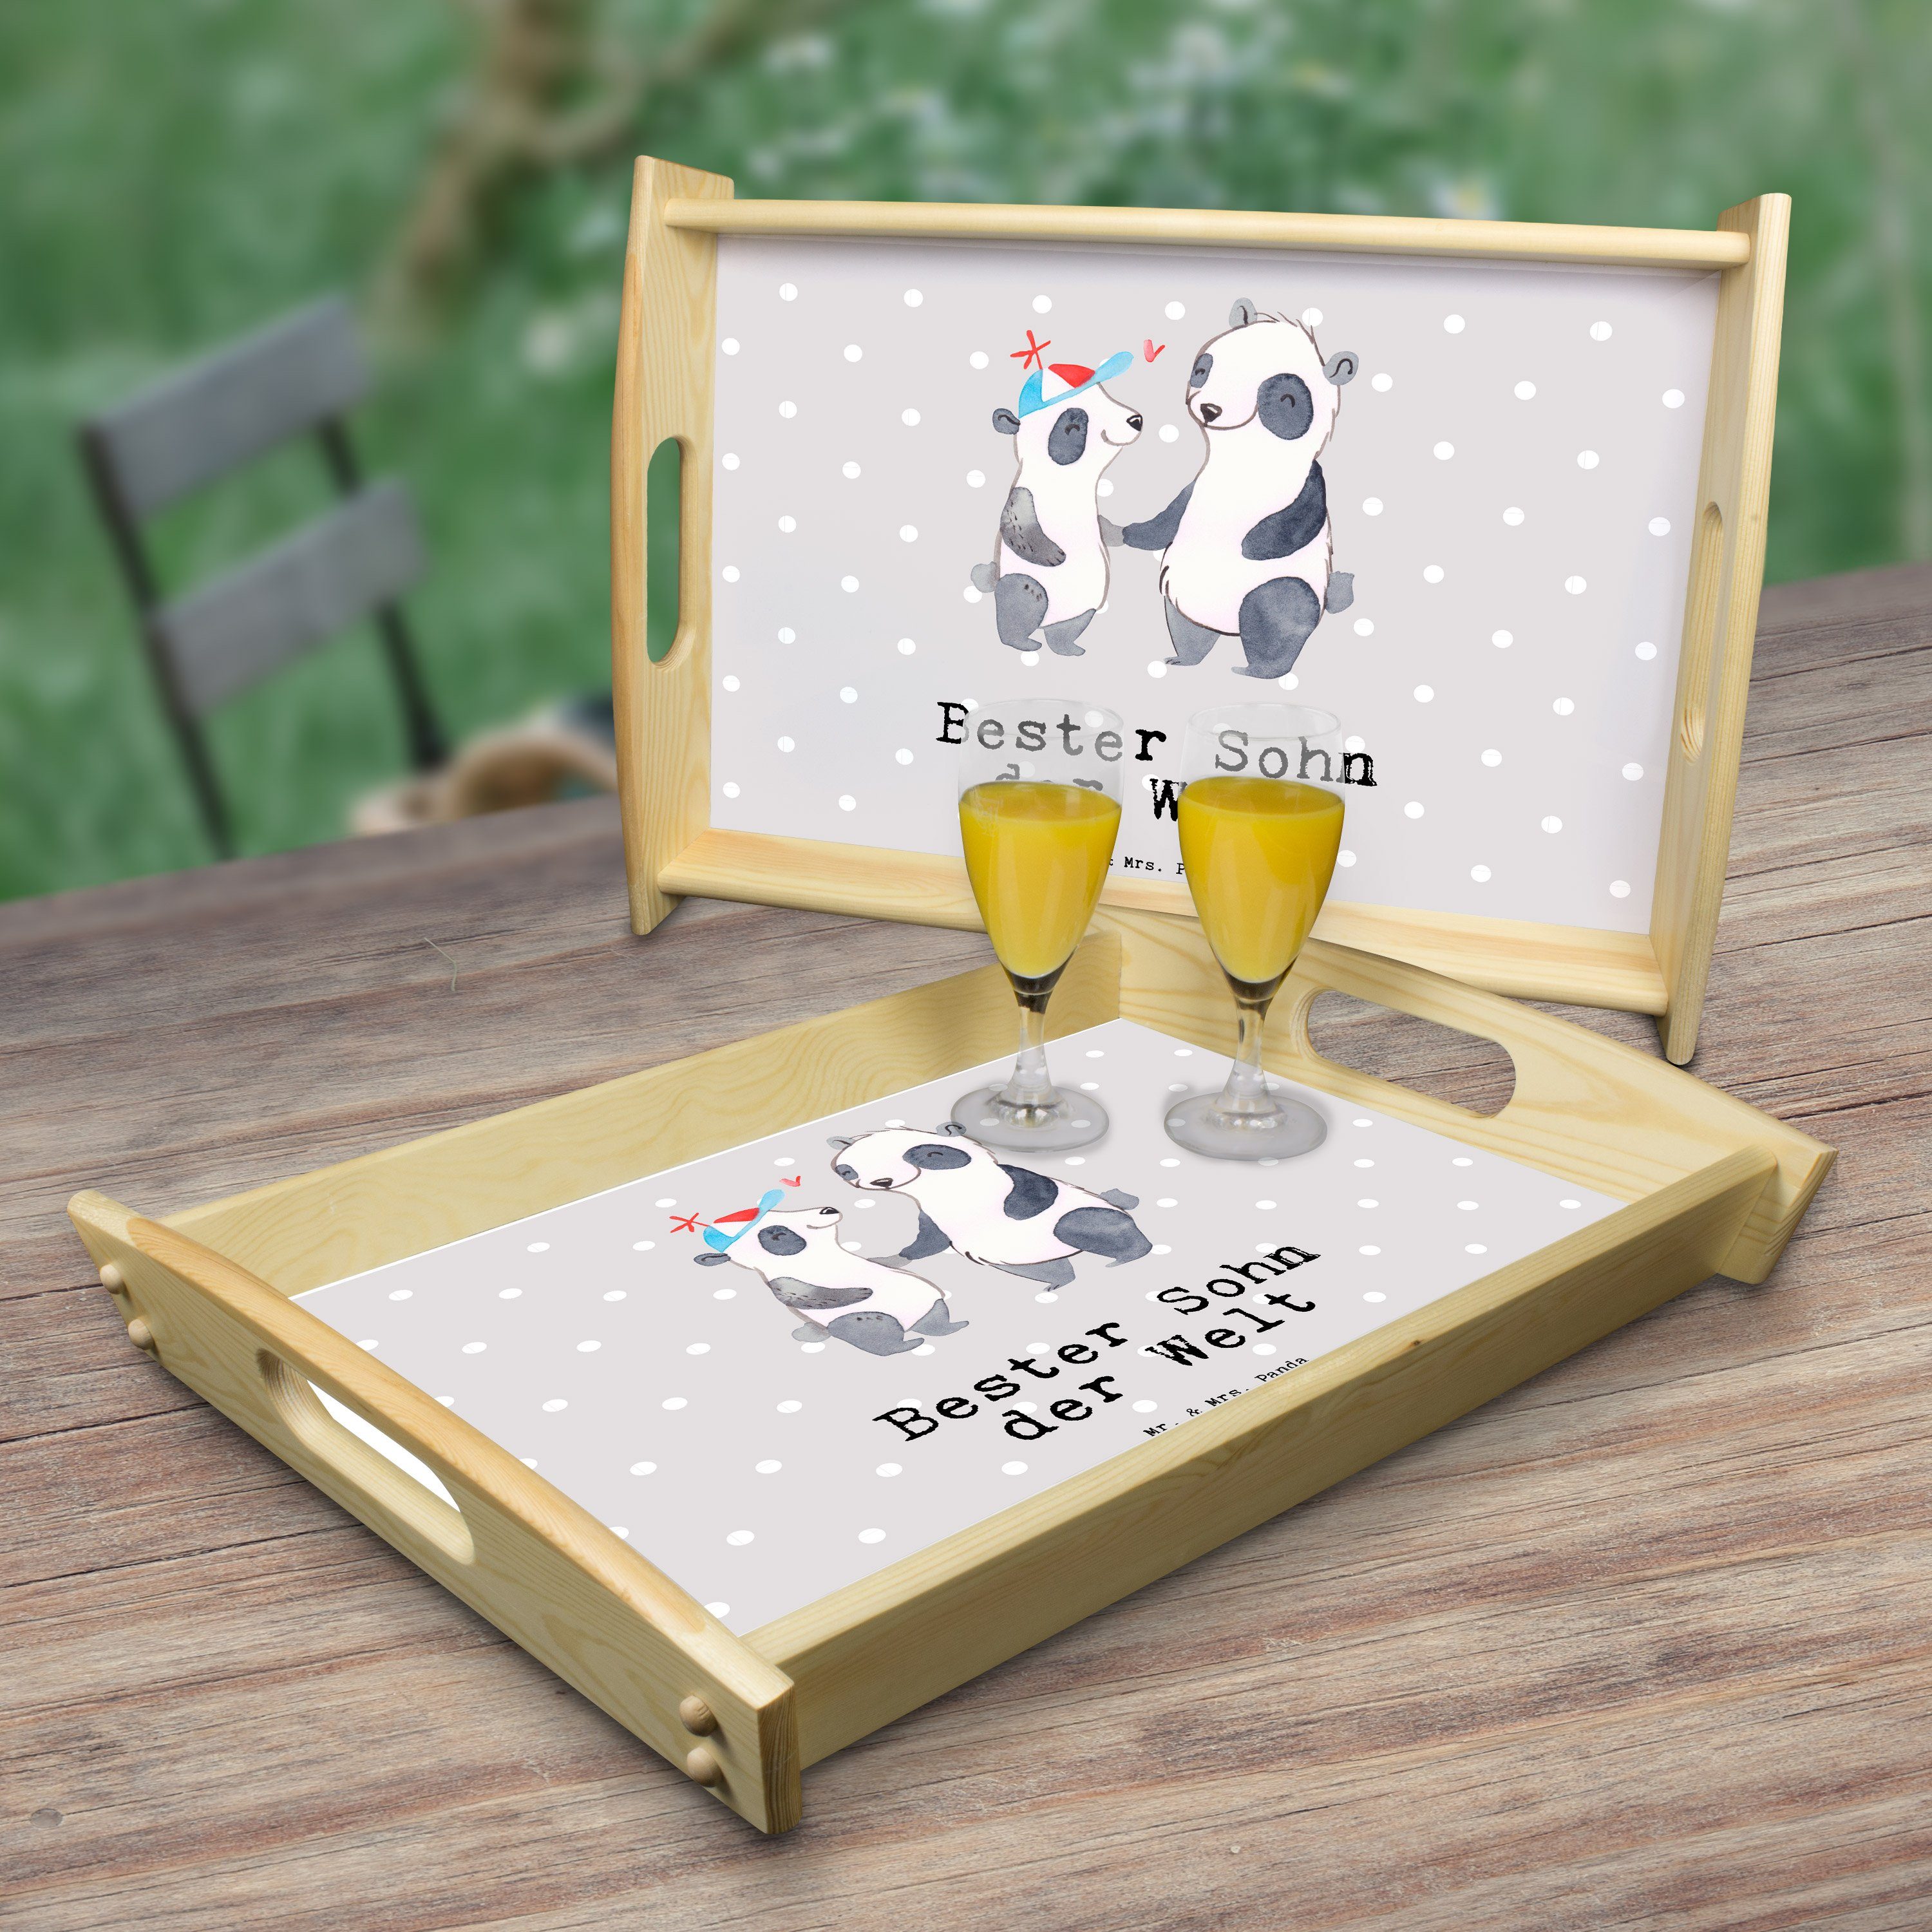 Mr. & Mrs. Panda Tablett - Sohn Grau (1-tlg) der Küchentablett, Geschenk, - Bester Welt Panda Pastell Echtholz lasiert